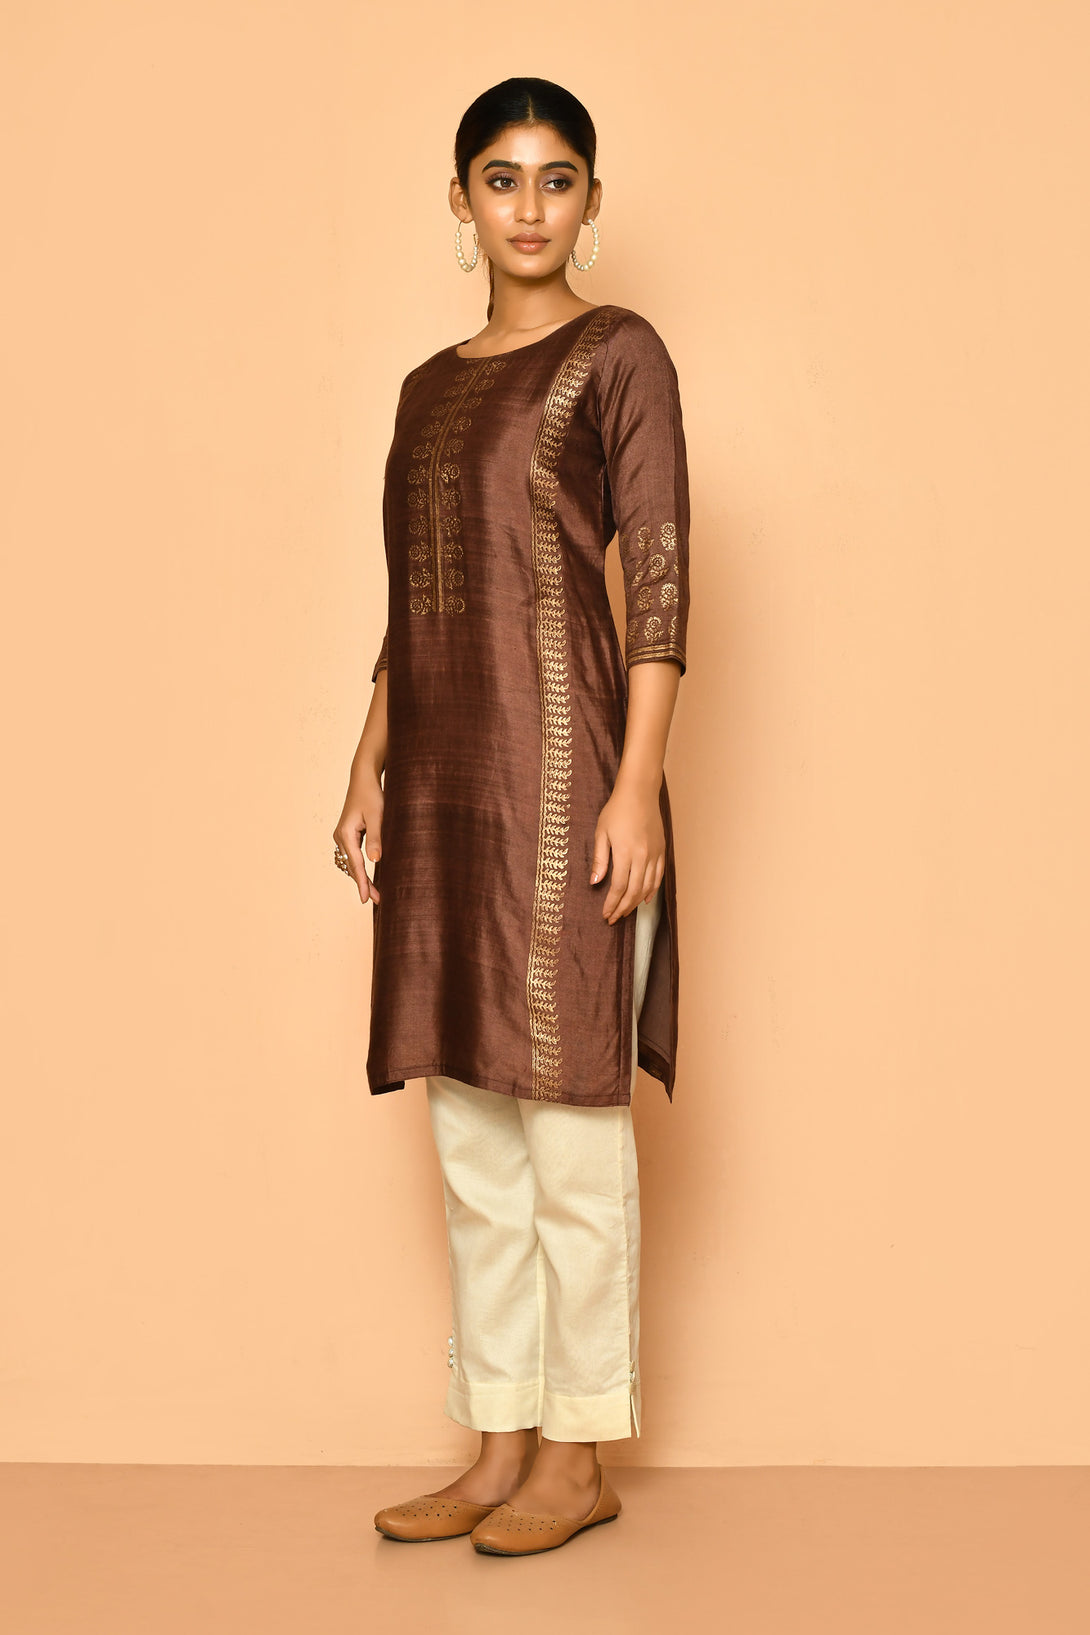 Handloom and hand block printed cotton silk straight  cut kurta for women